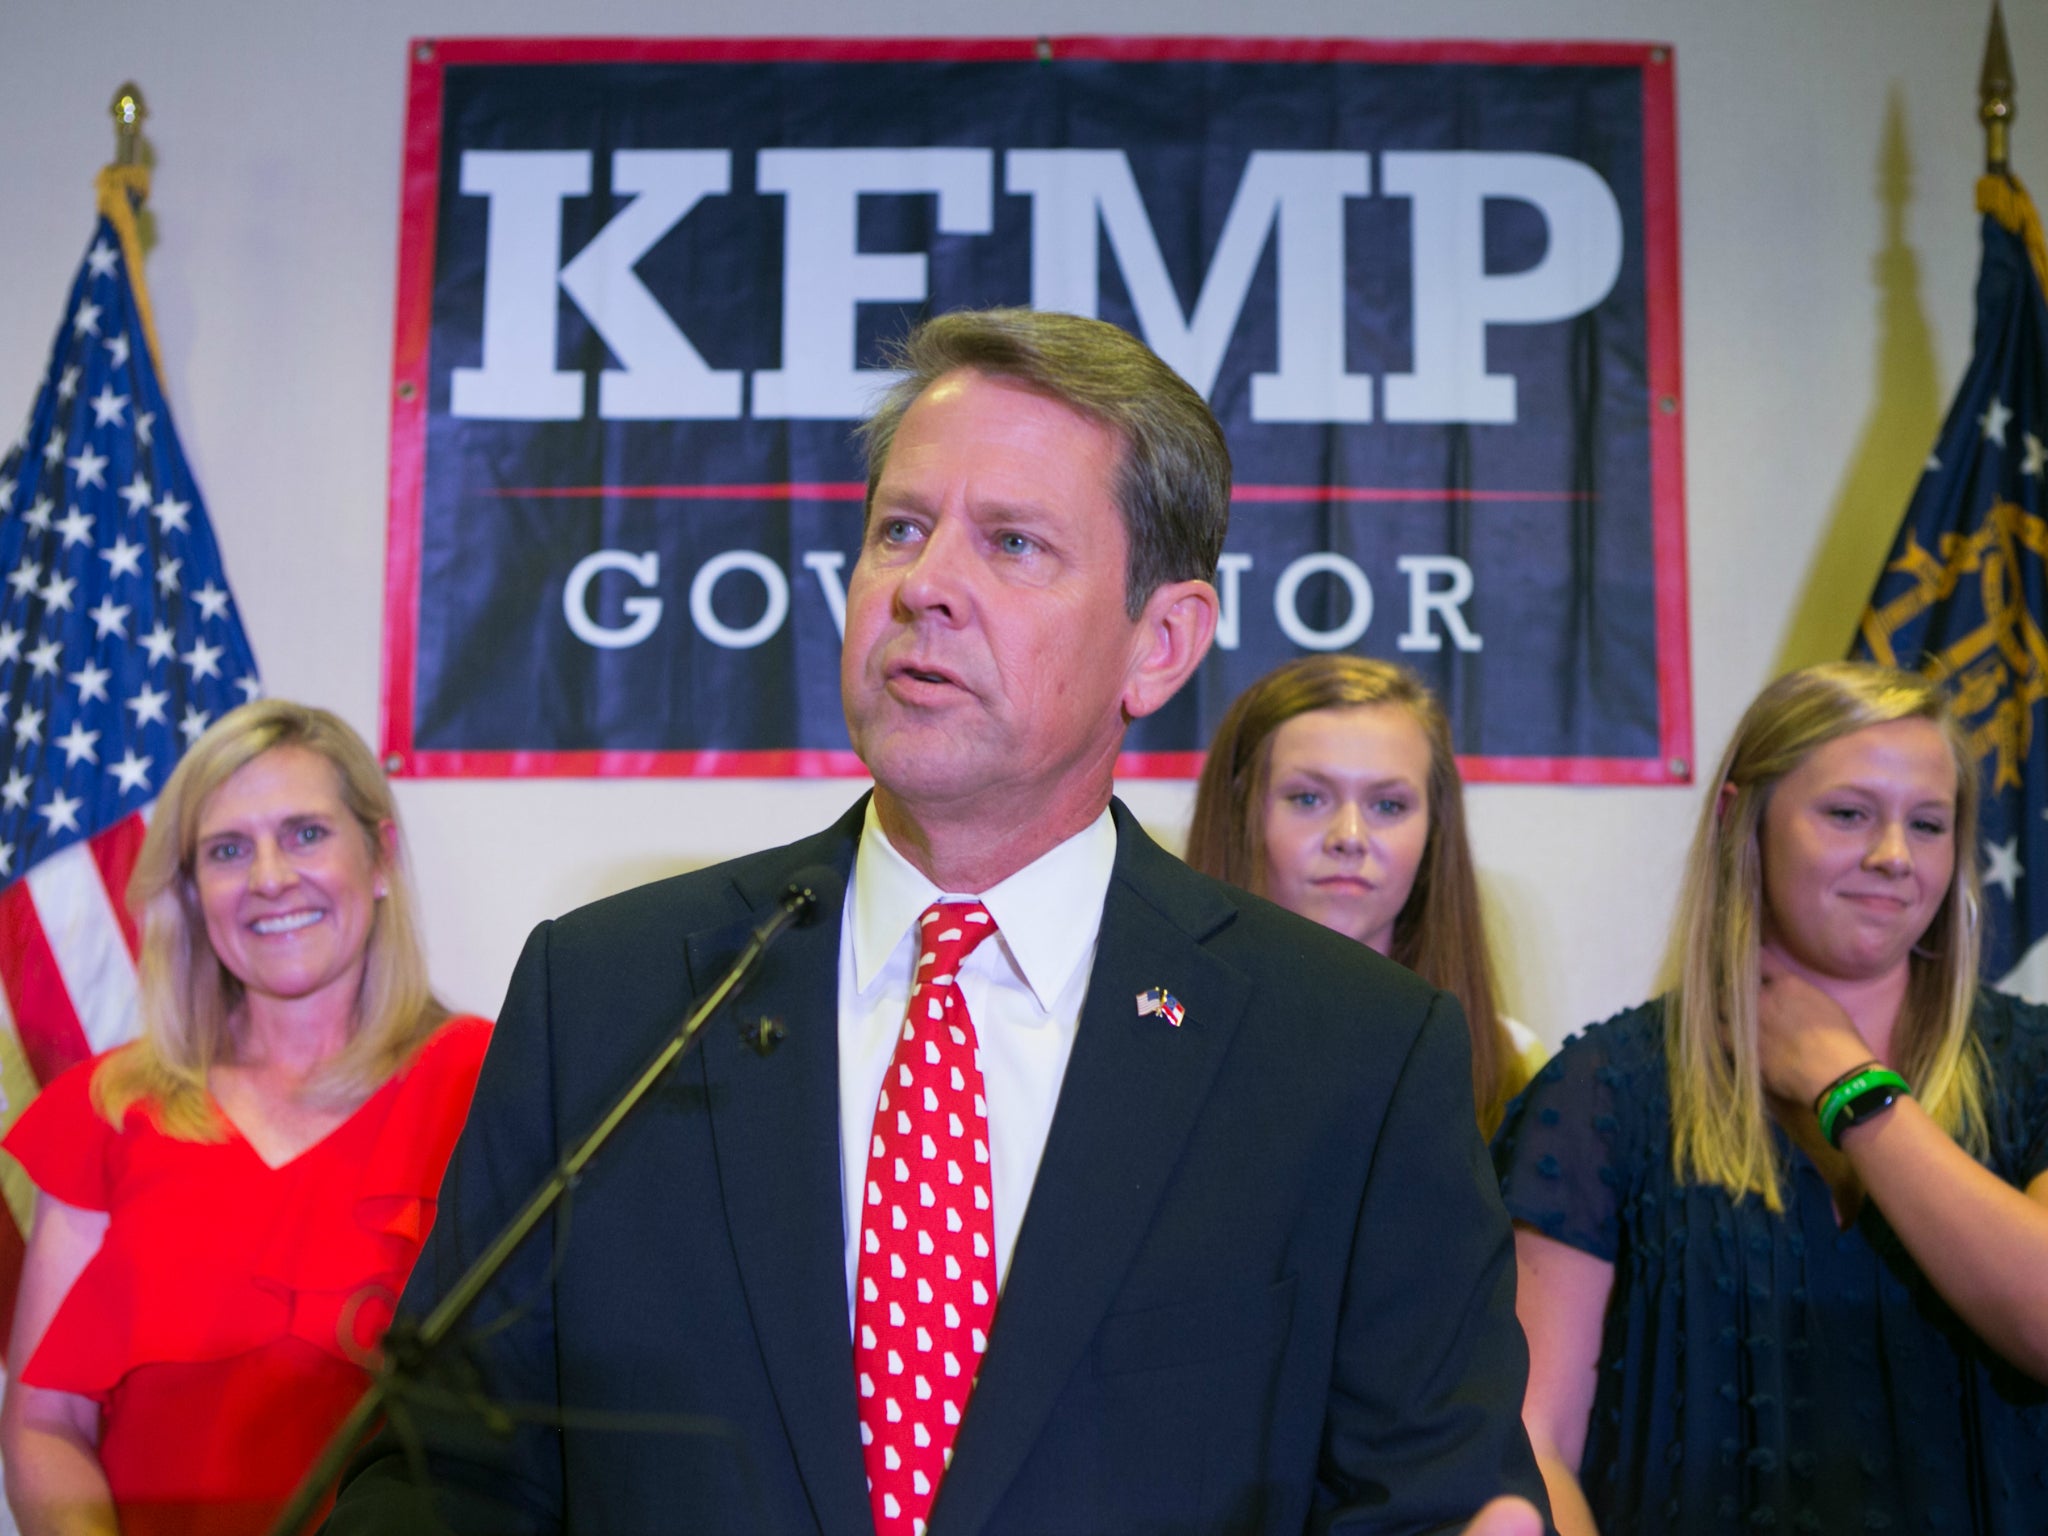 Kemp has promised to put ‘Georgia First’